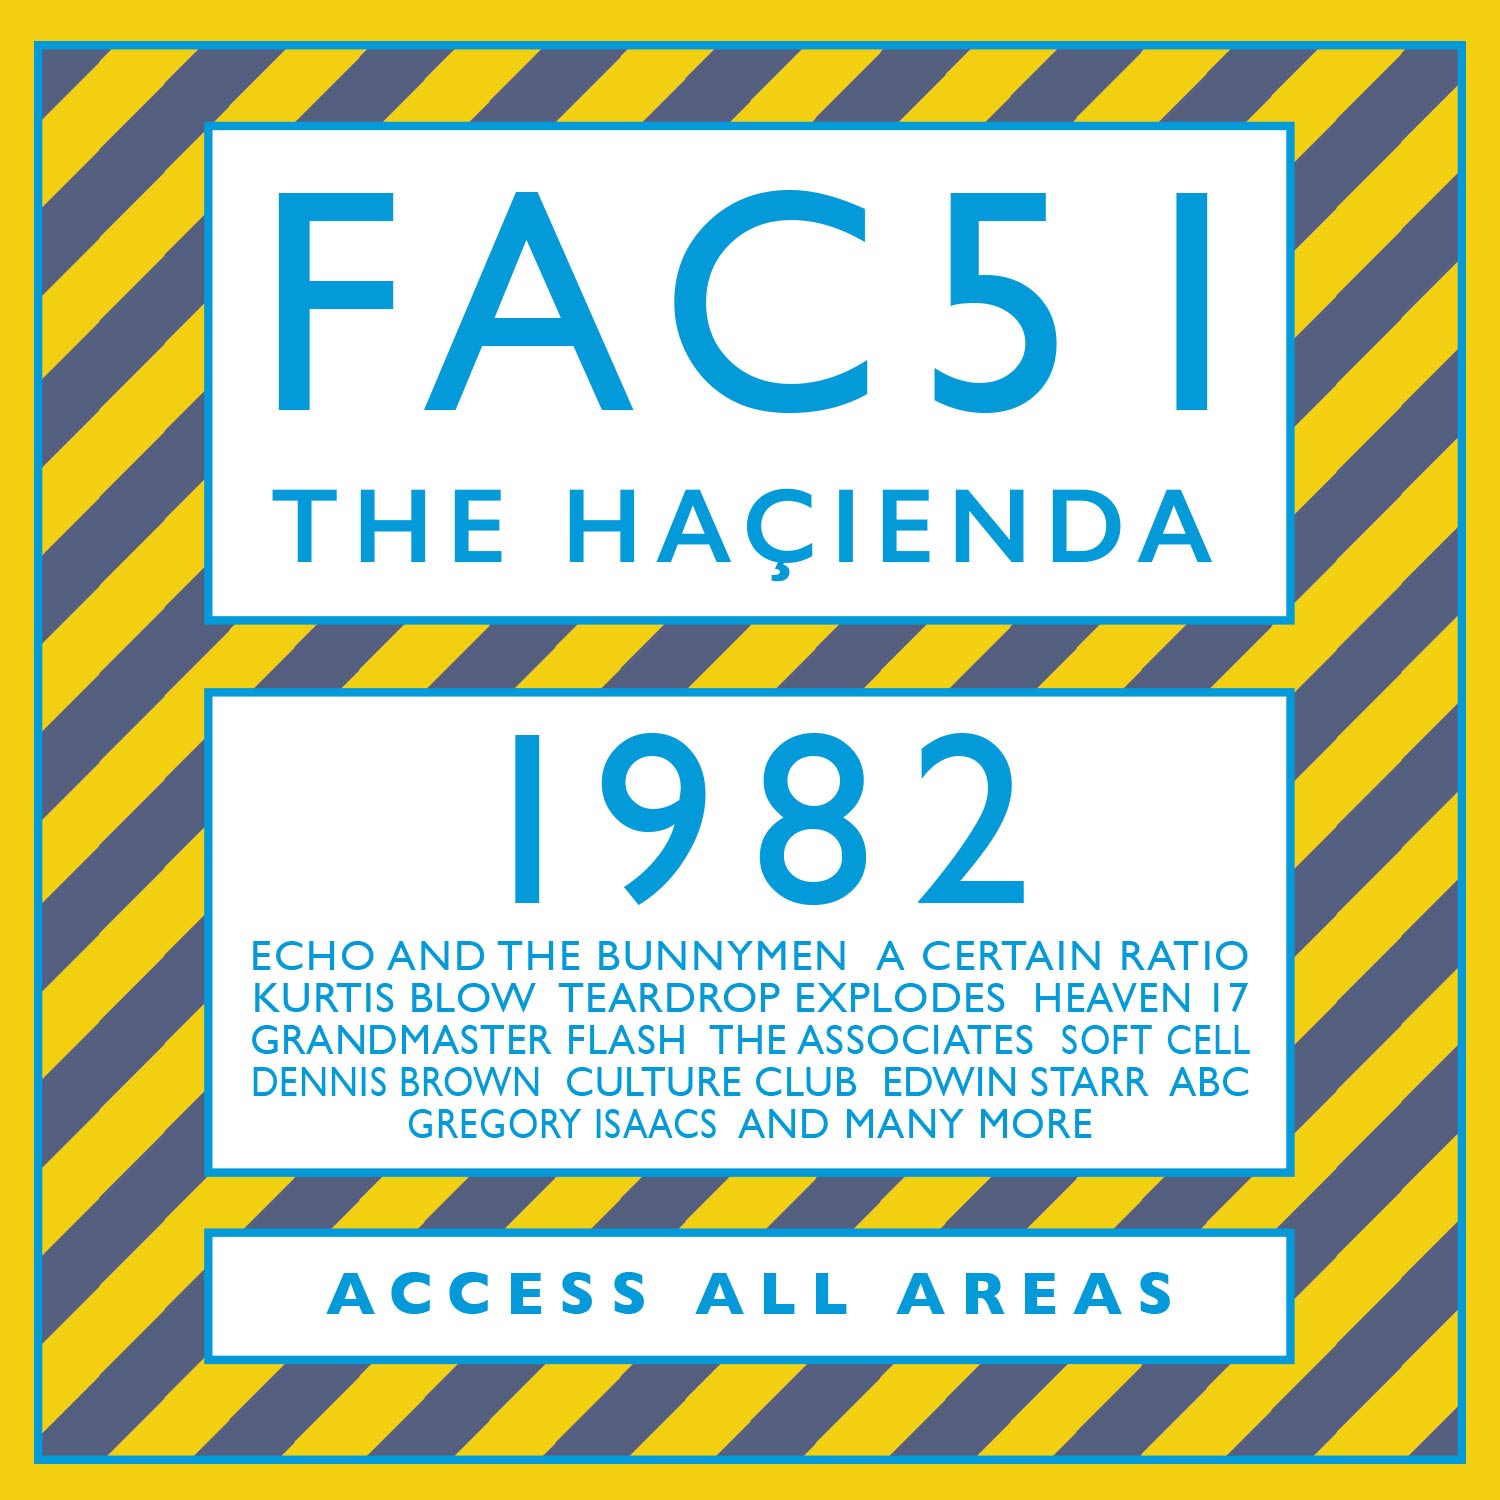 FAC51 The Hacienda 1982